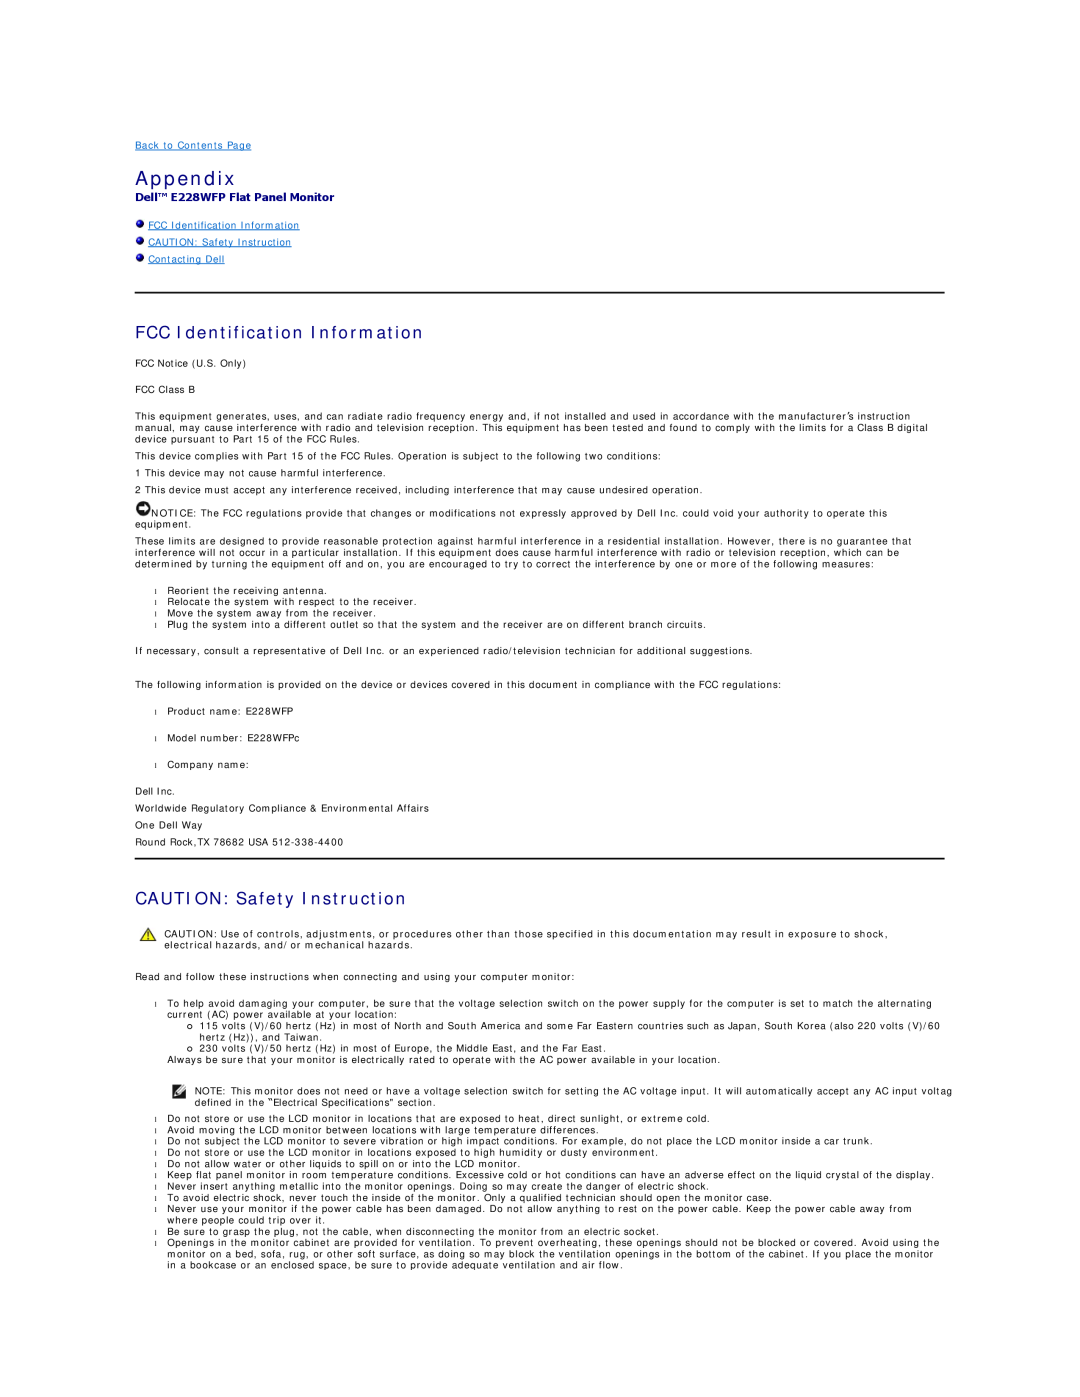 Dell appendix Appendix, FCC Identification Information, CAUTION Safety Instruction, Dell E228WFP Flat Panel Monitor 